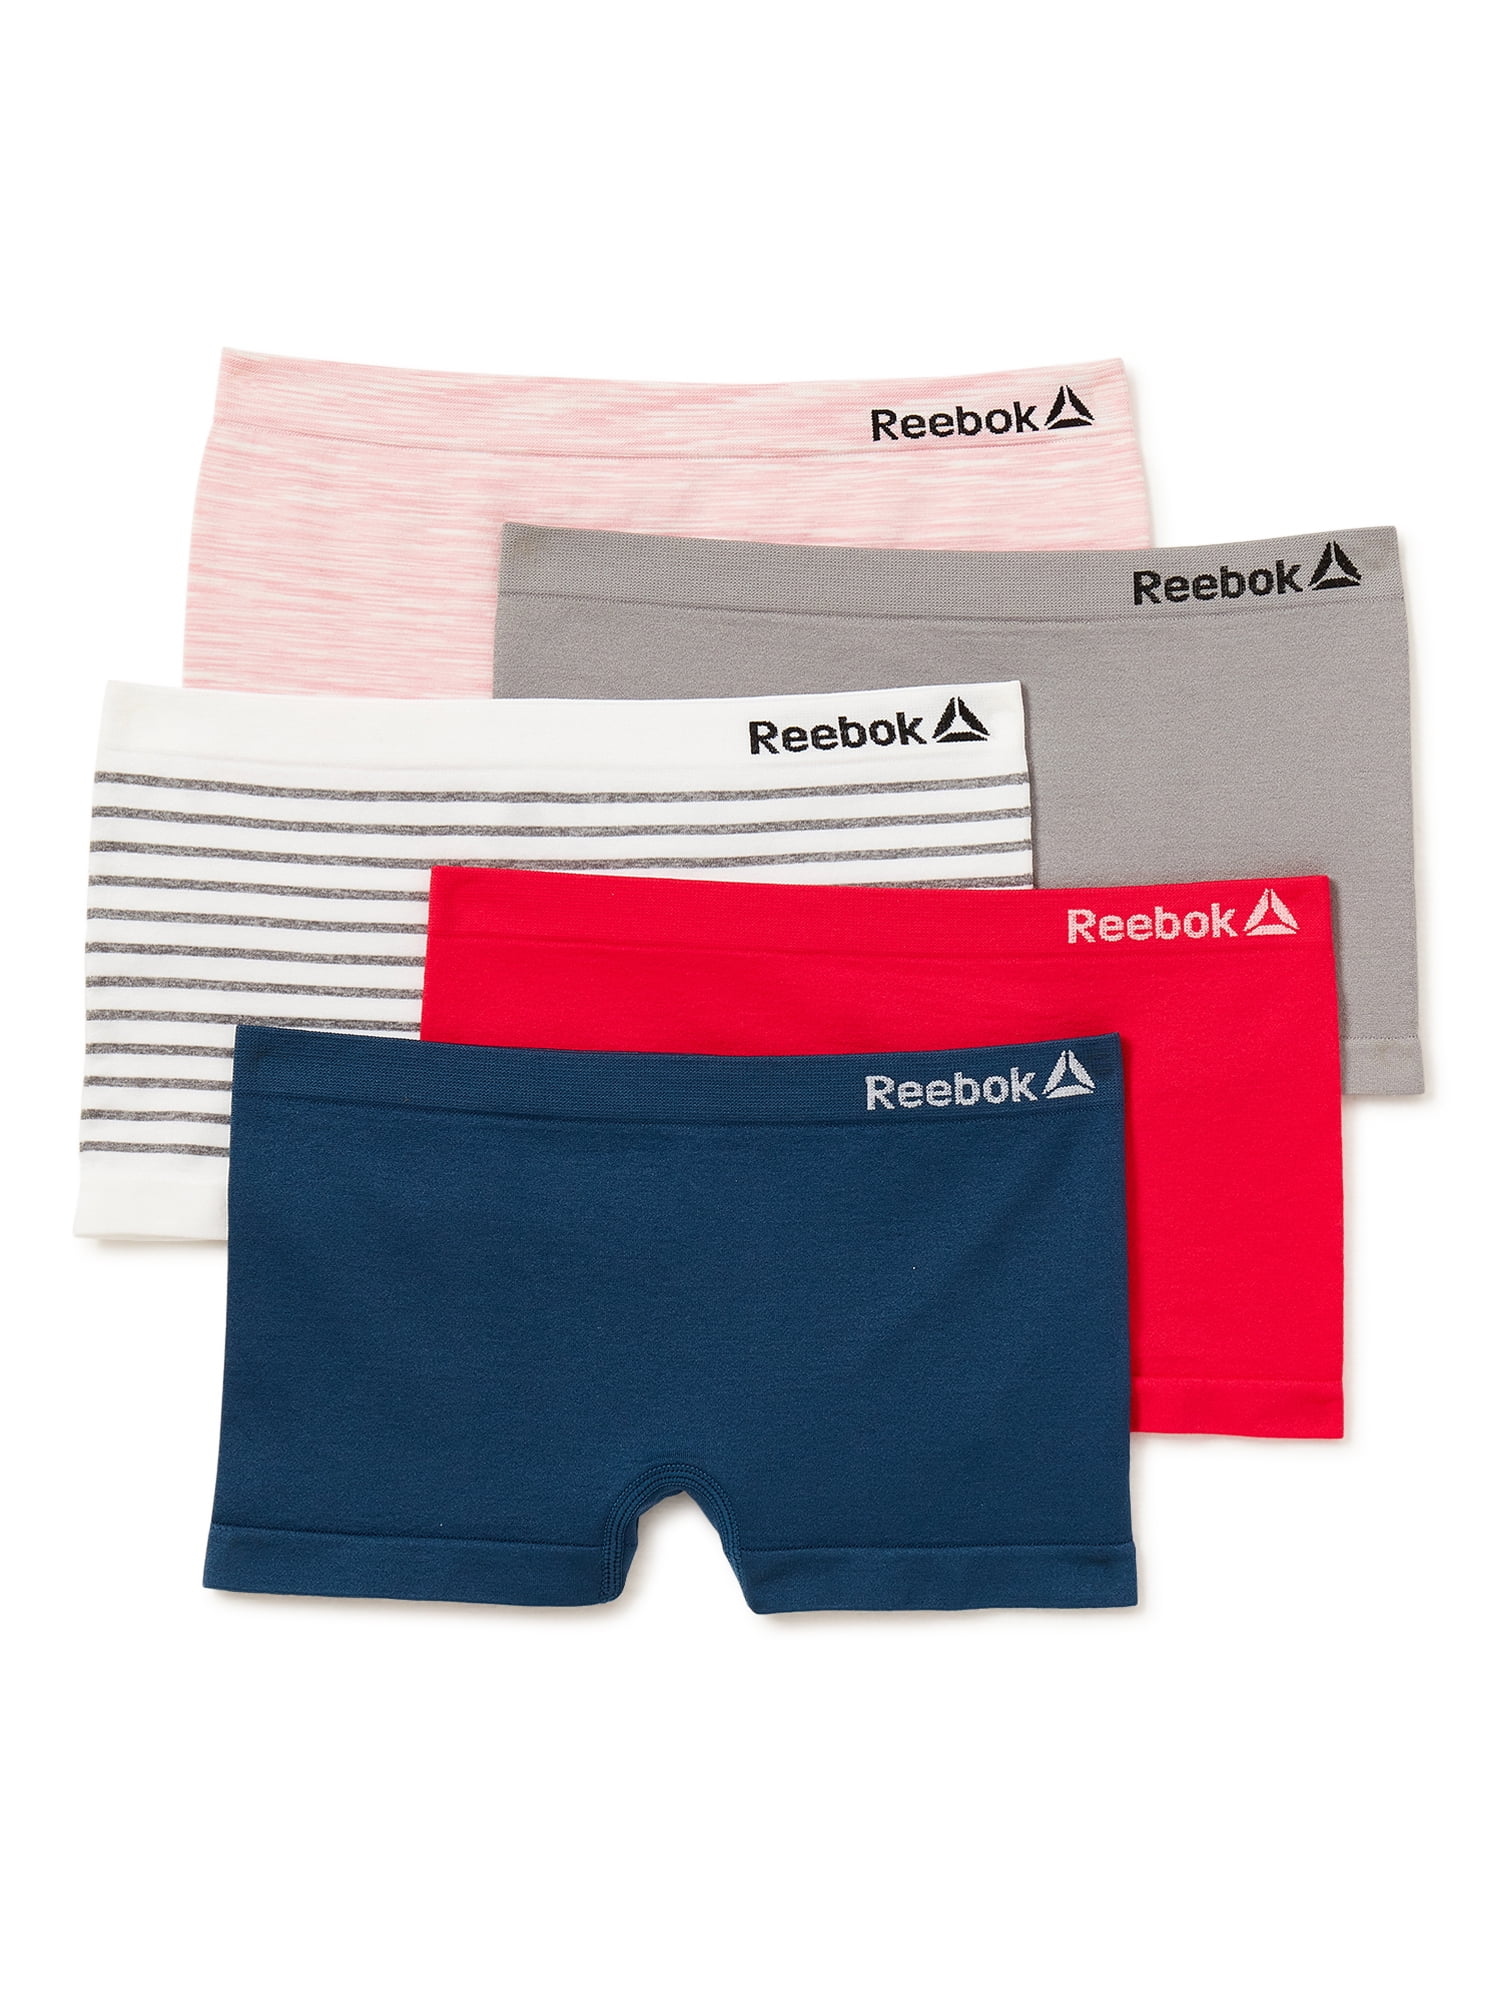 Reebok ~ Womens Boyshort Underwear Panties Nylon Blend 4-Pair ~ XL 